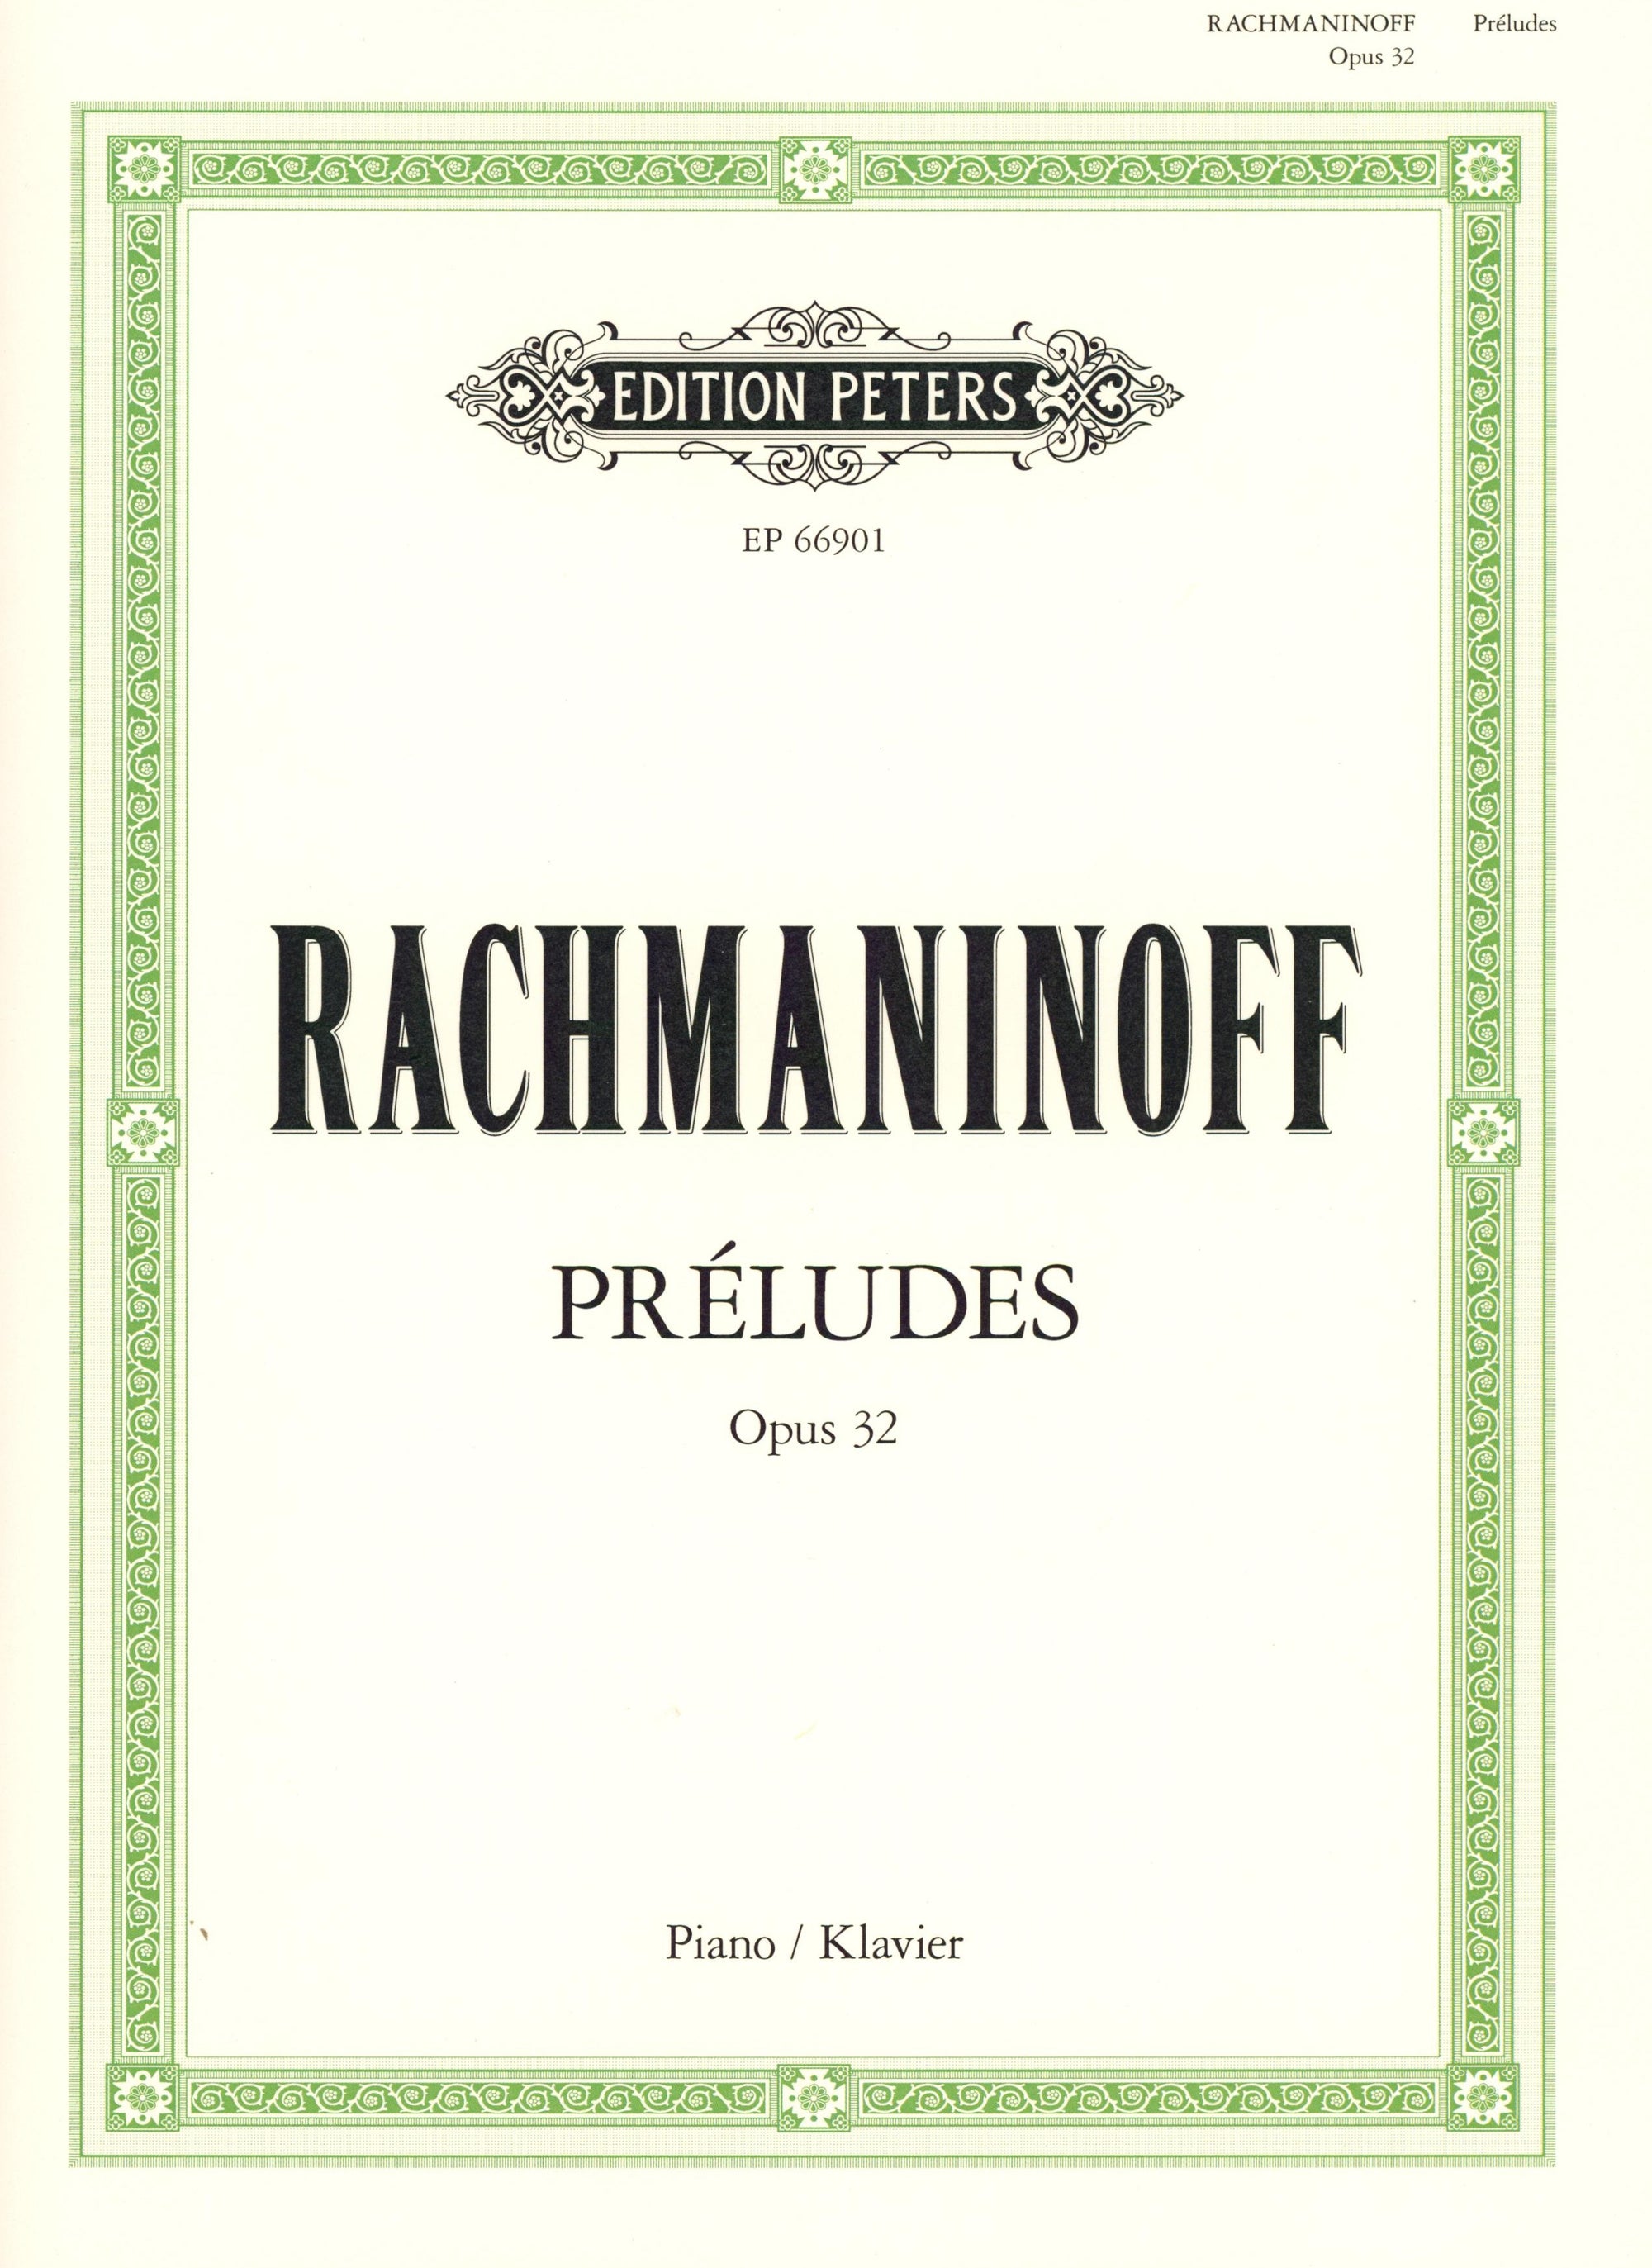 Rachmaninoff: Préludes, Op. 32